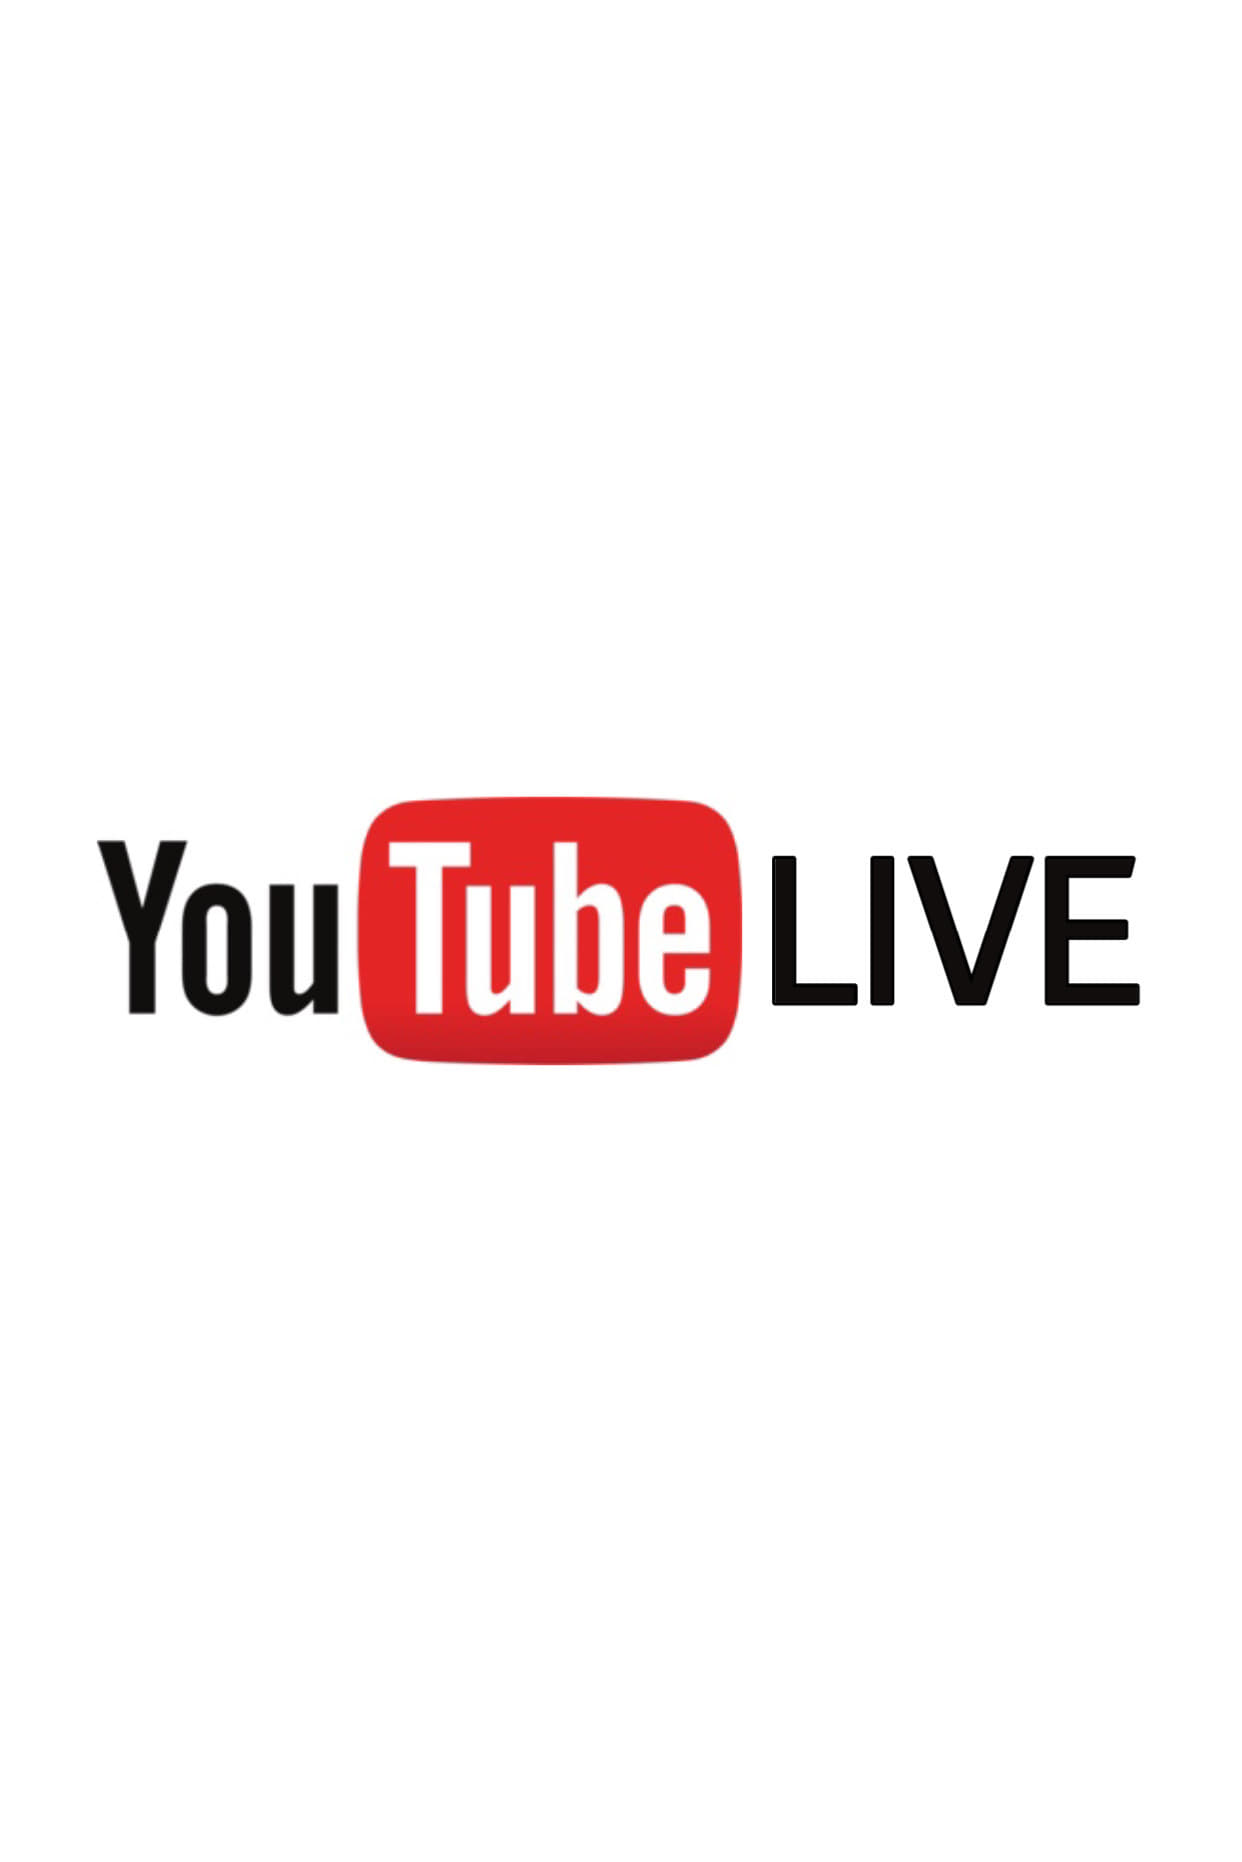 YouTube Live (2008)